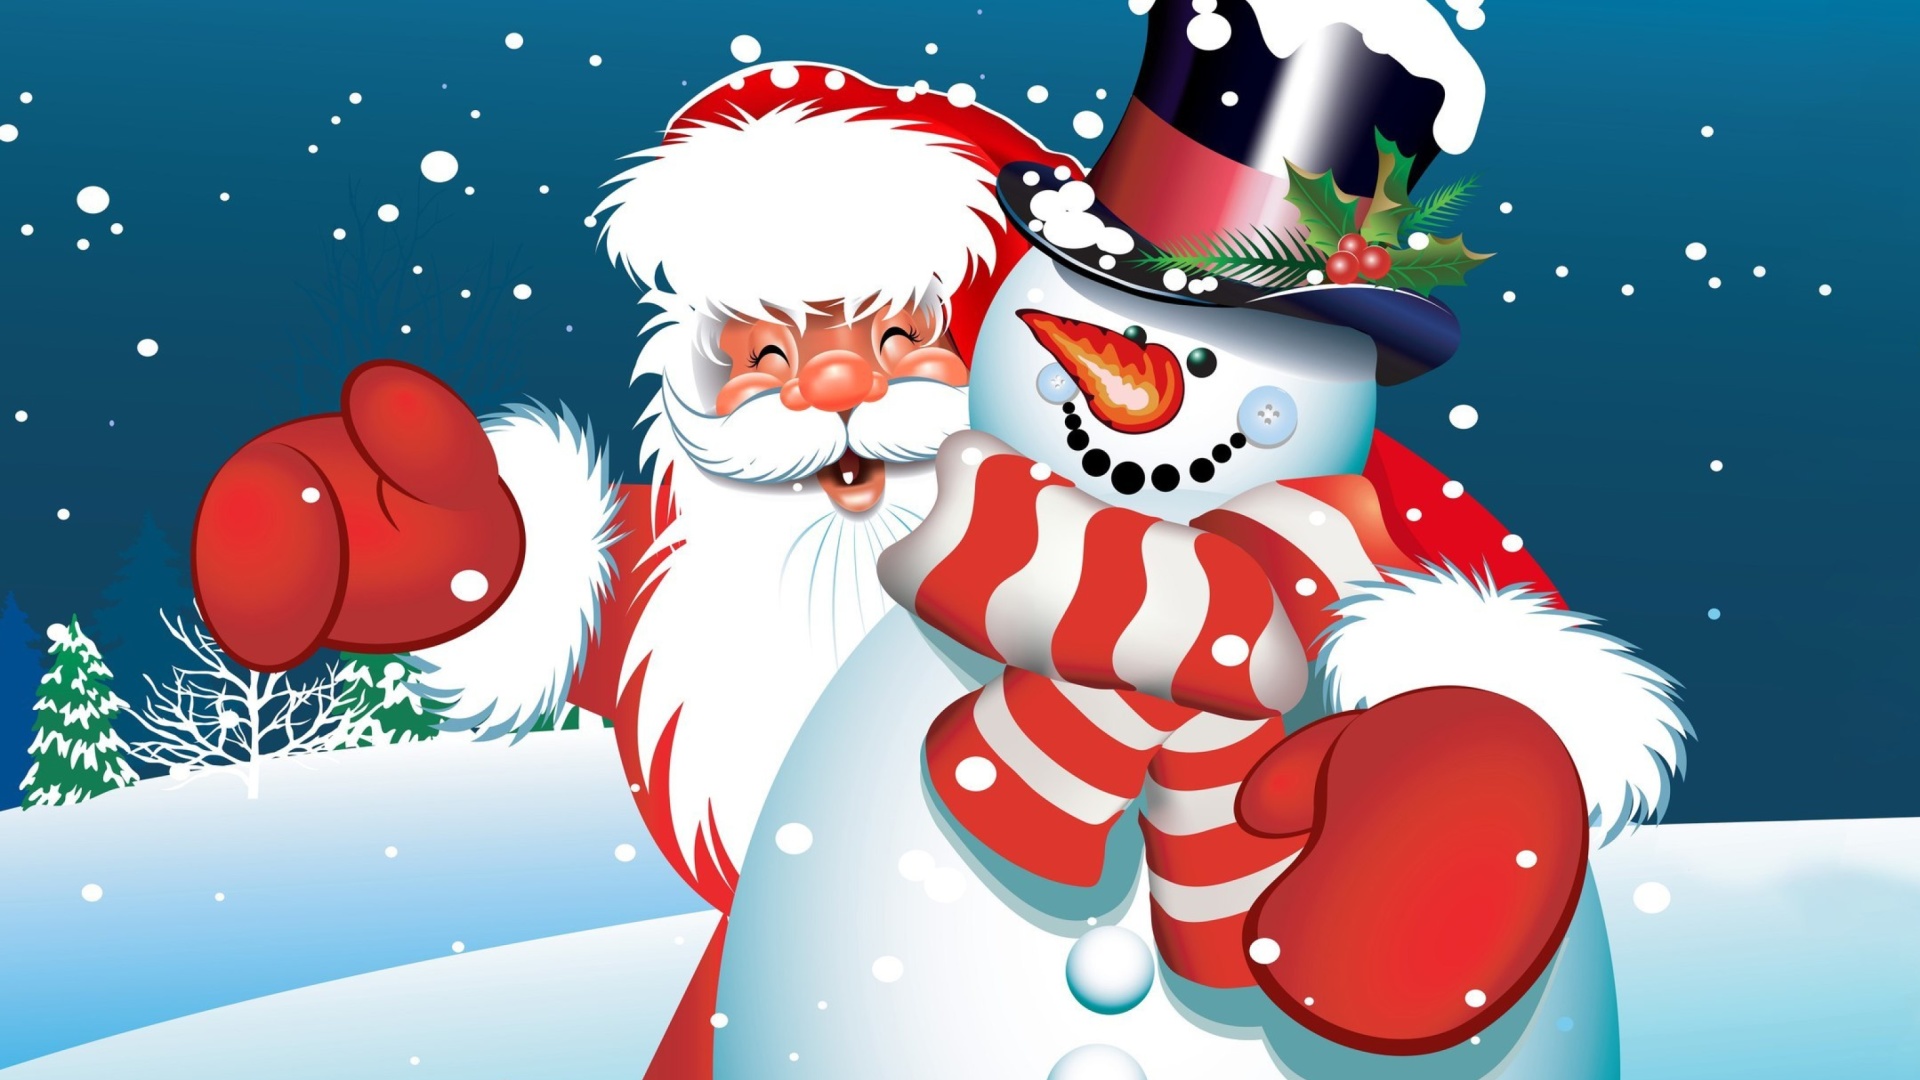 Santa with Snowman wallpaper 1920x1080